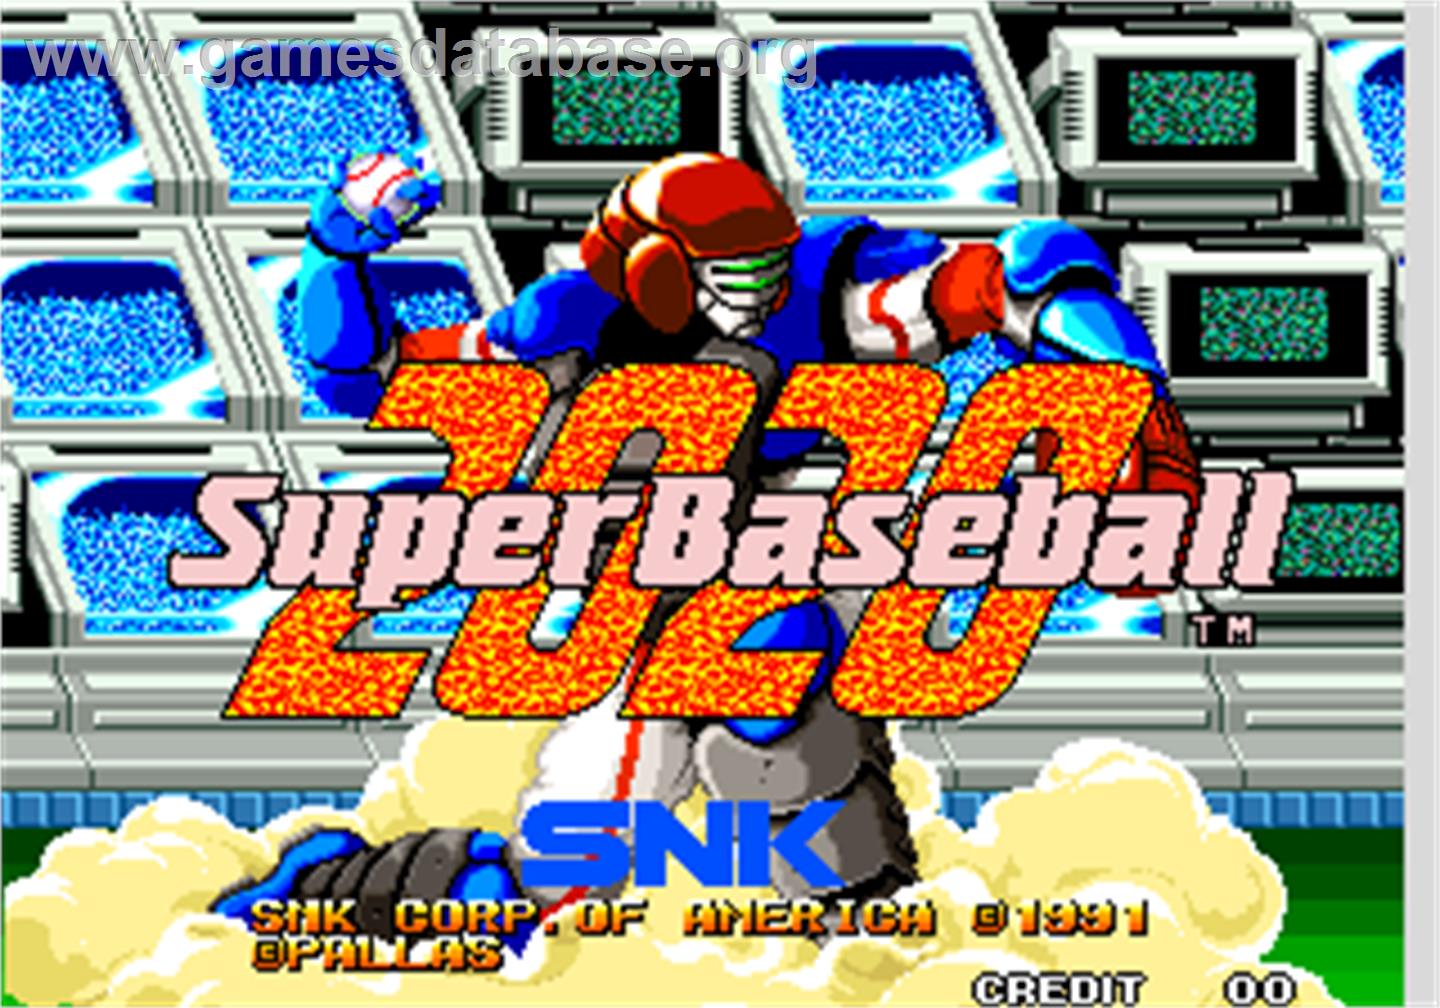 2020 Super Baseball - Arcade - Artwork - Title Screen